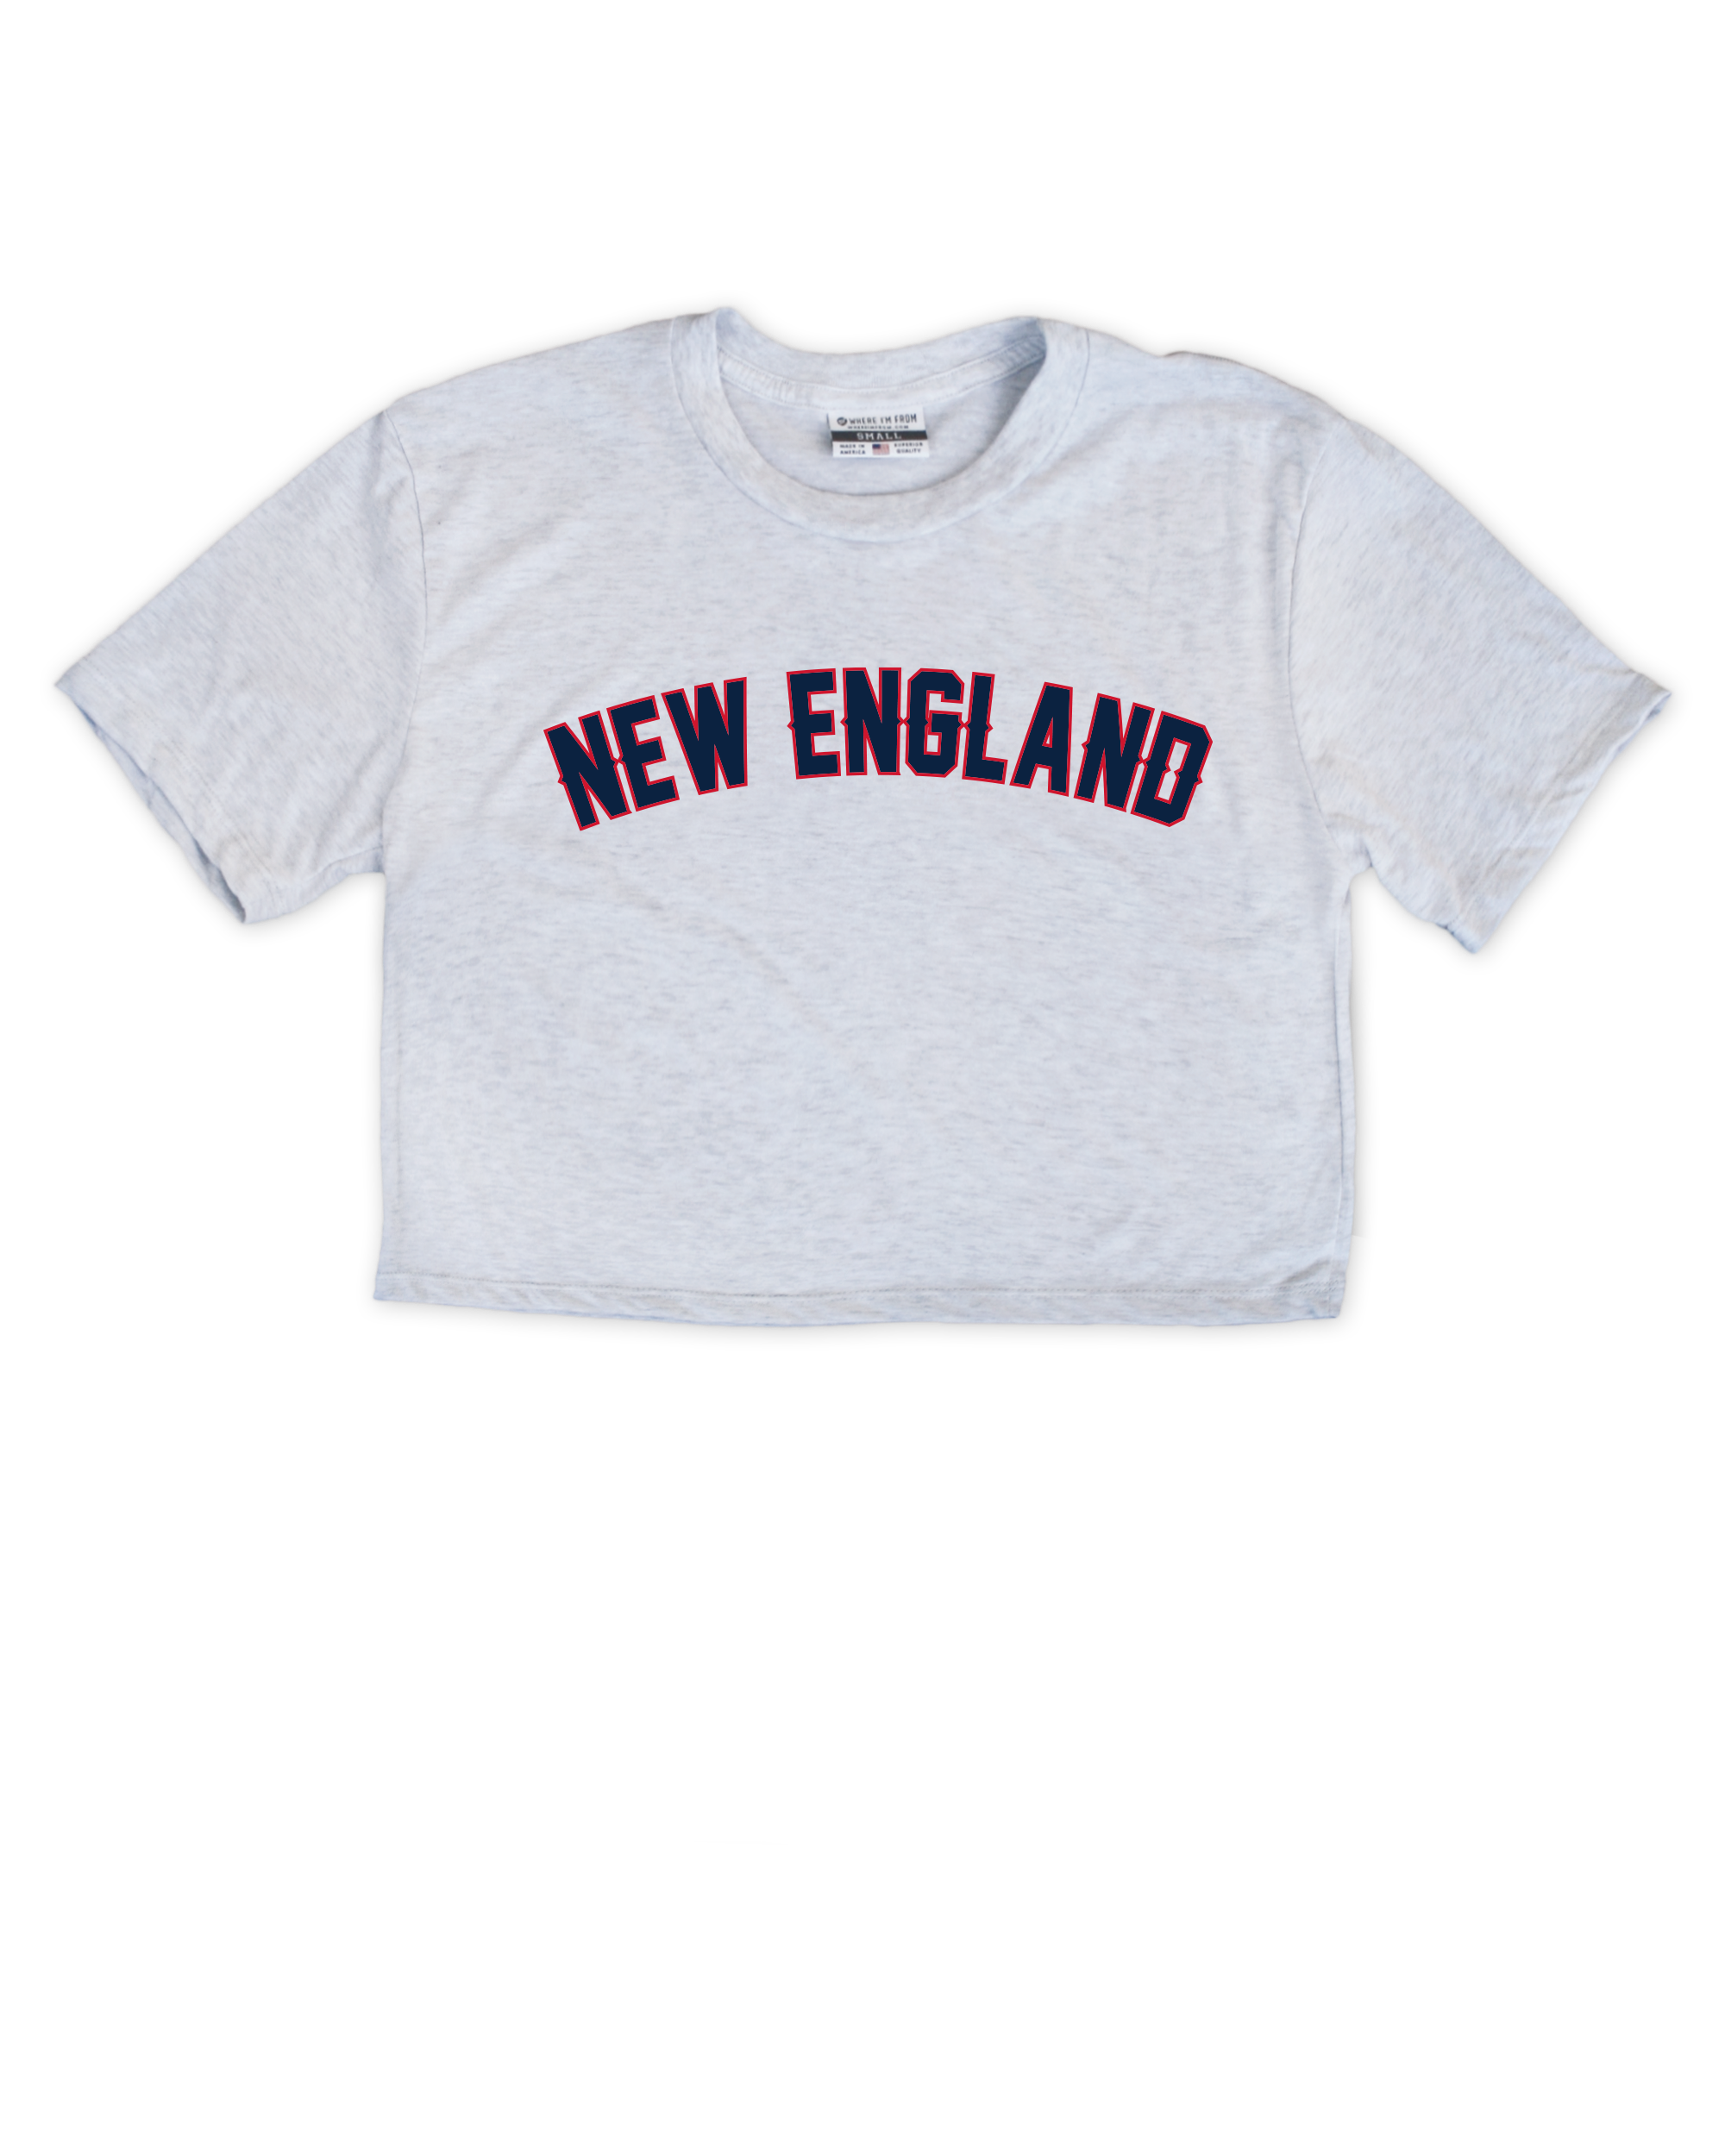 New England Jersey Crop Top